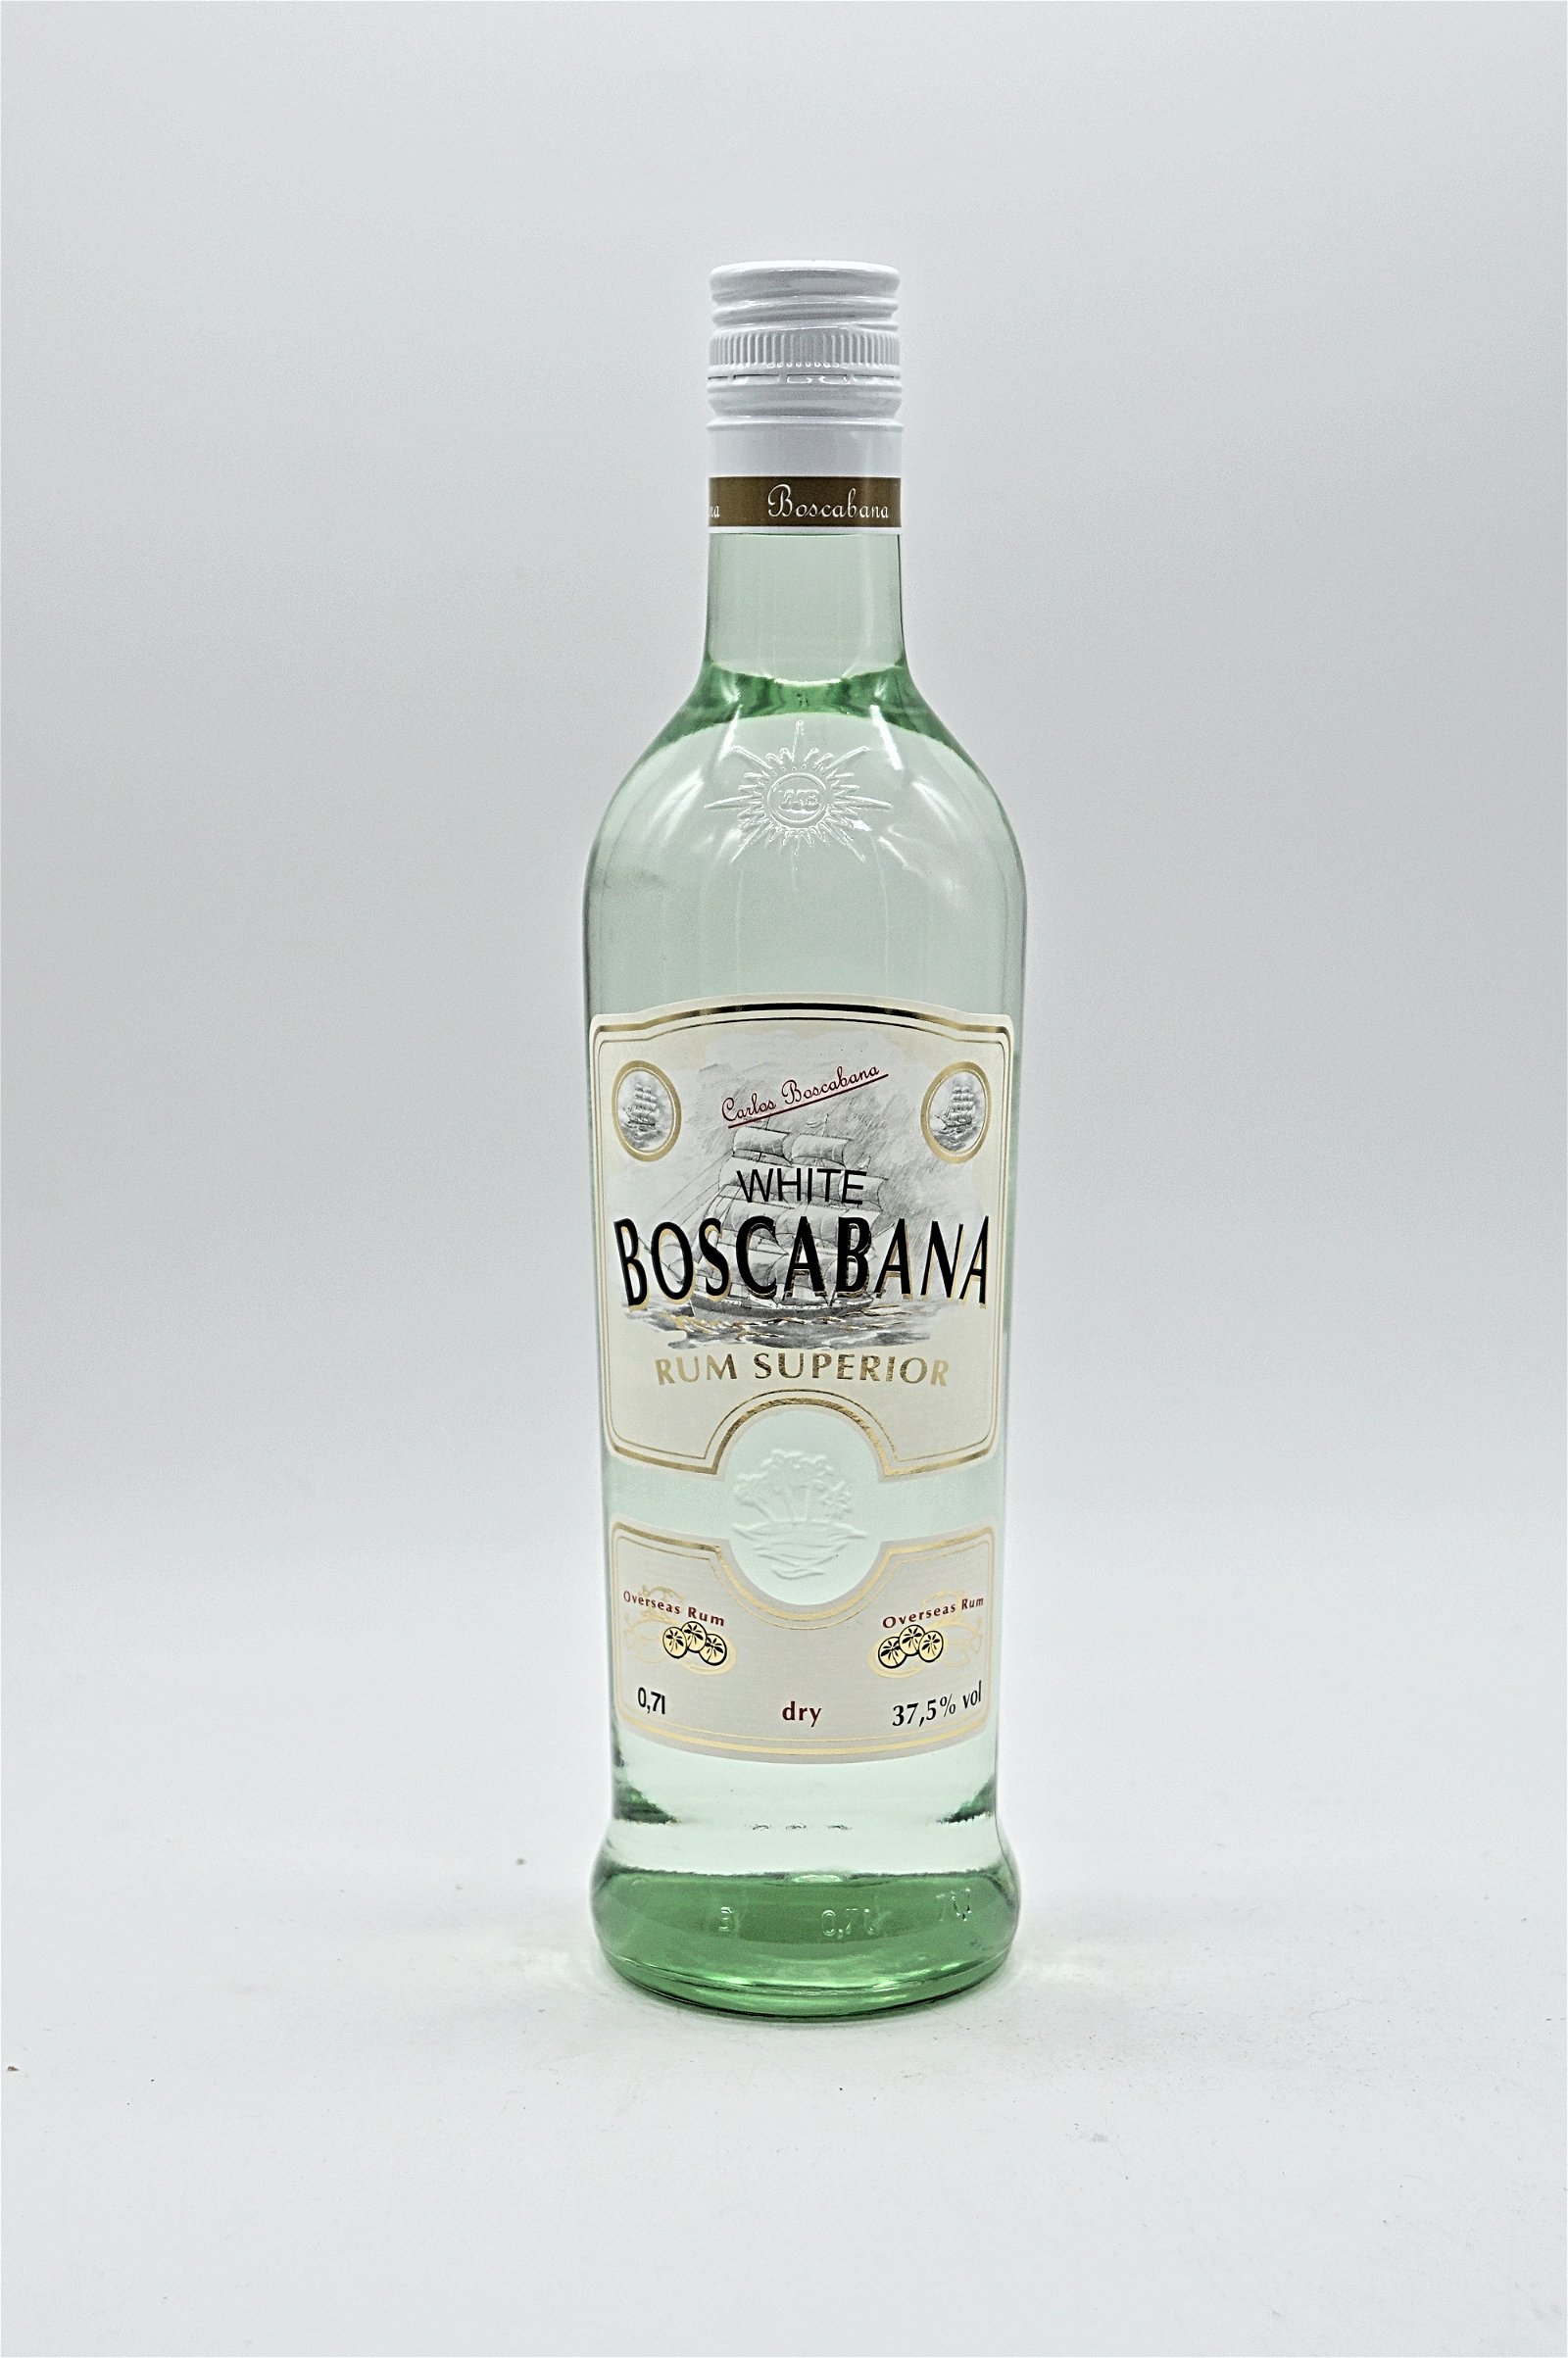 Boscabana White Rum Superior 